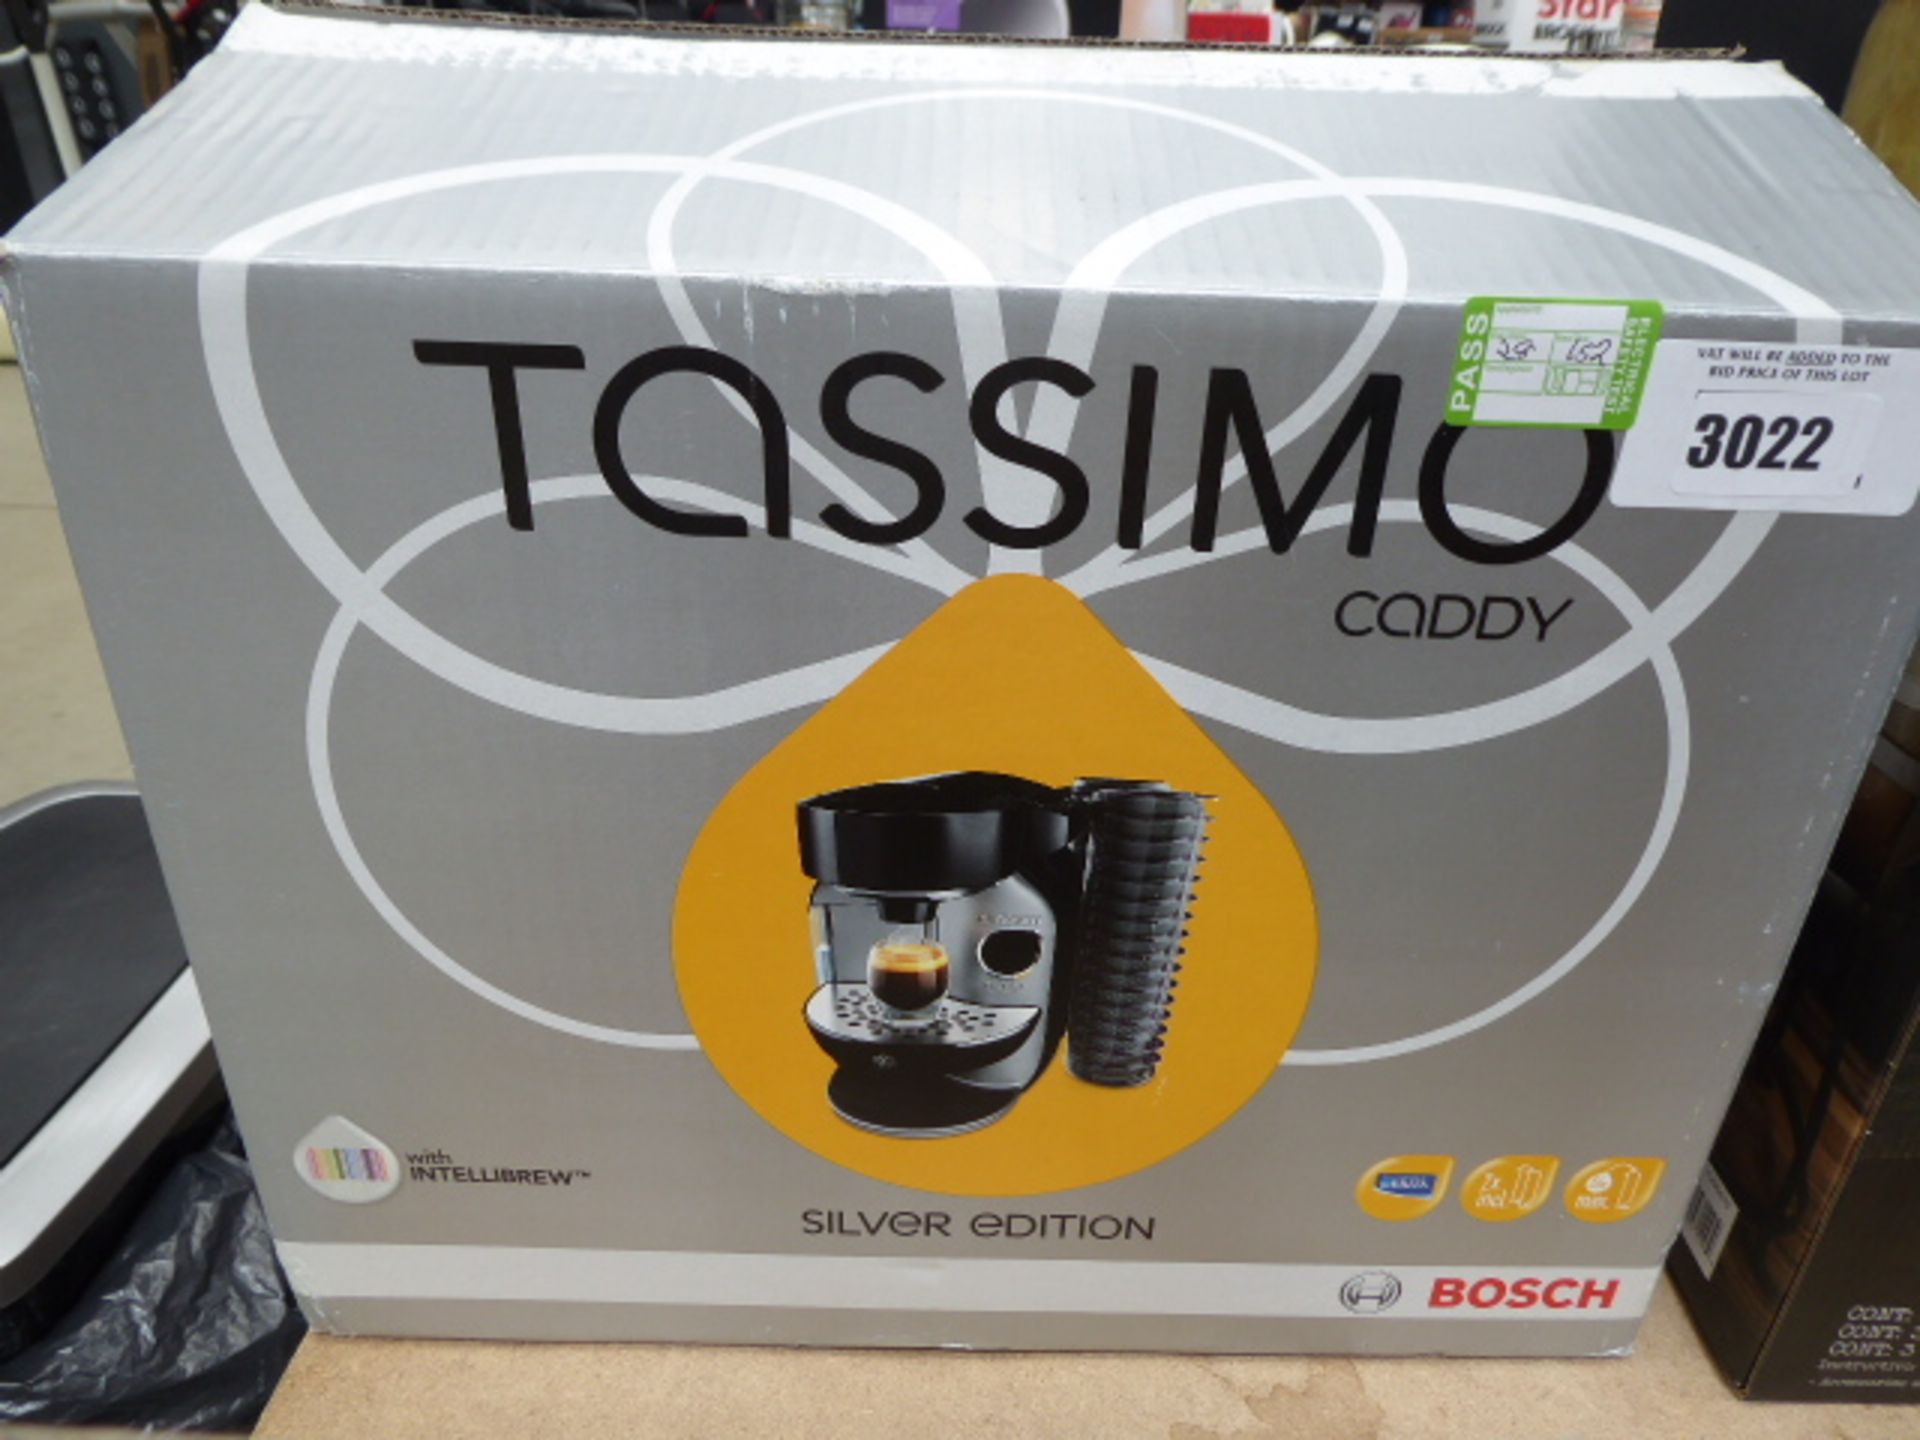 Boxed Tassimo caddy Bosch coffee dispenser